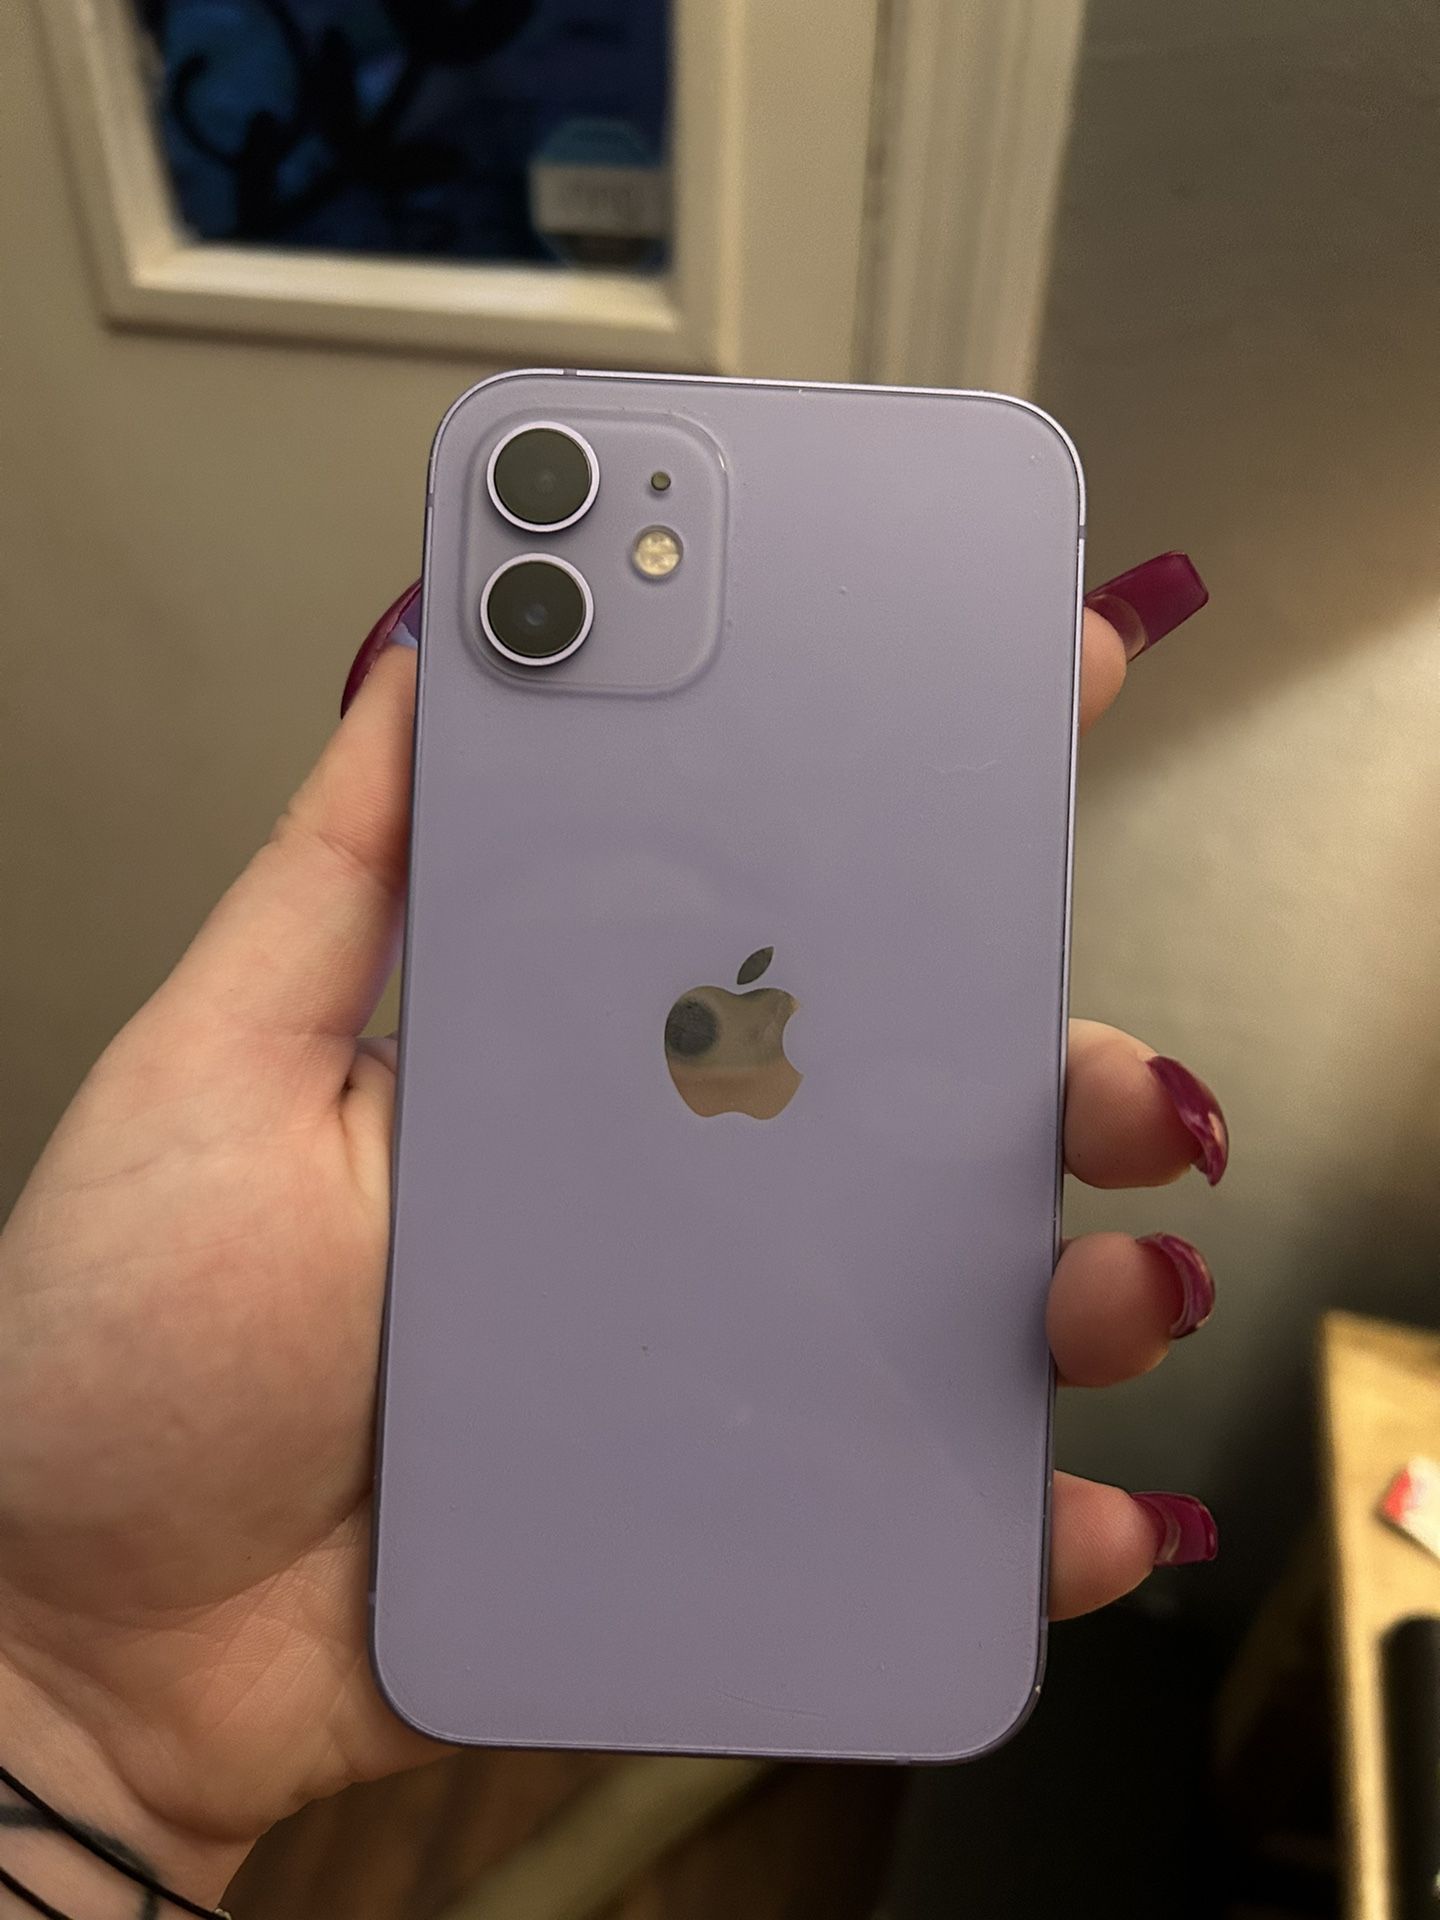 Purple iPhone 12 64gb